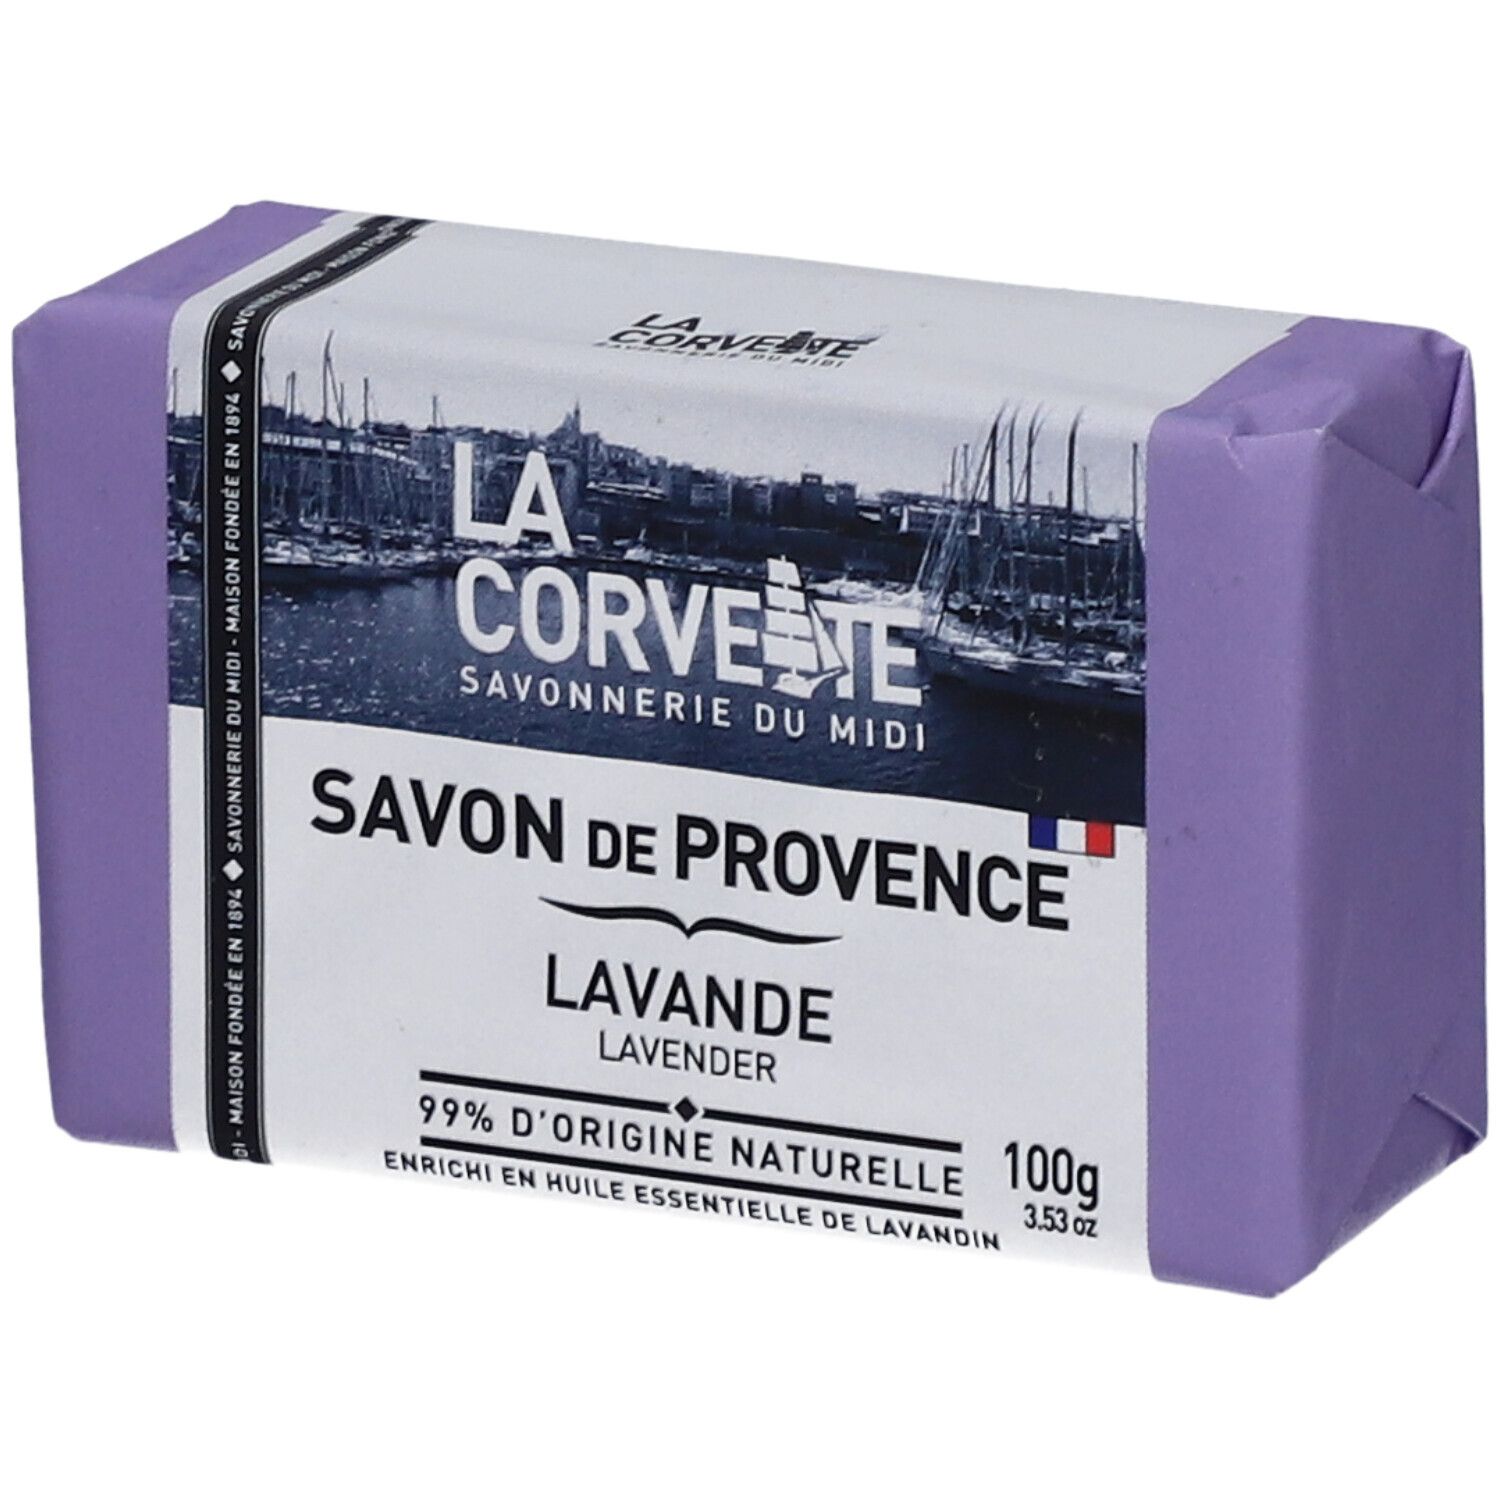 LA Corvette Savon de Provence Lavande